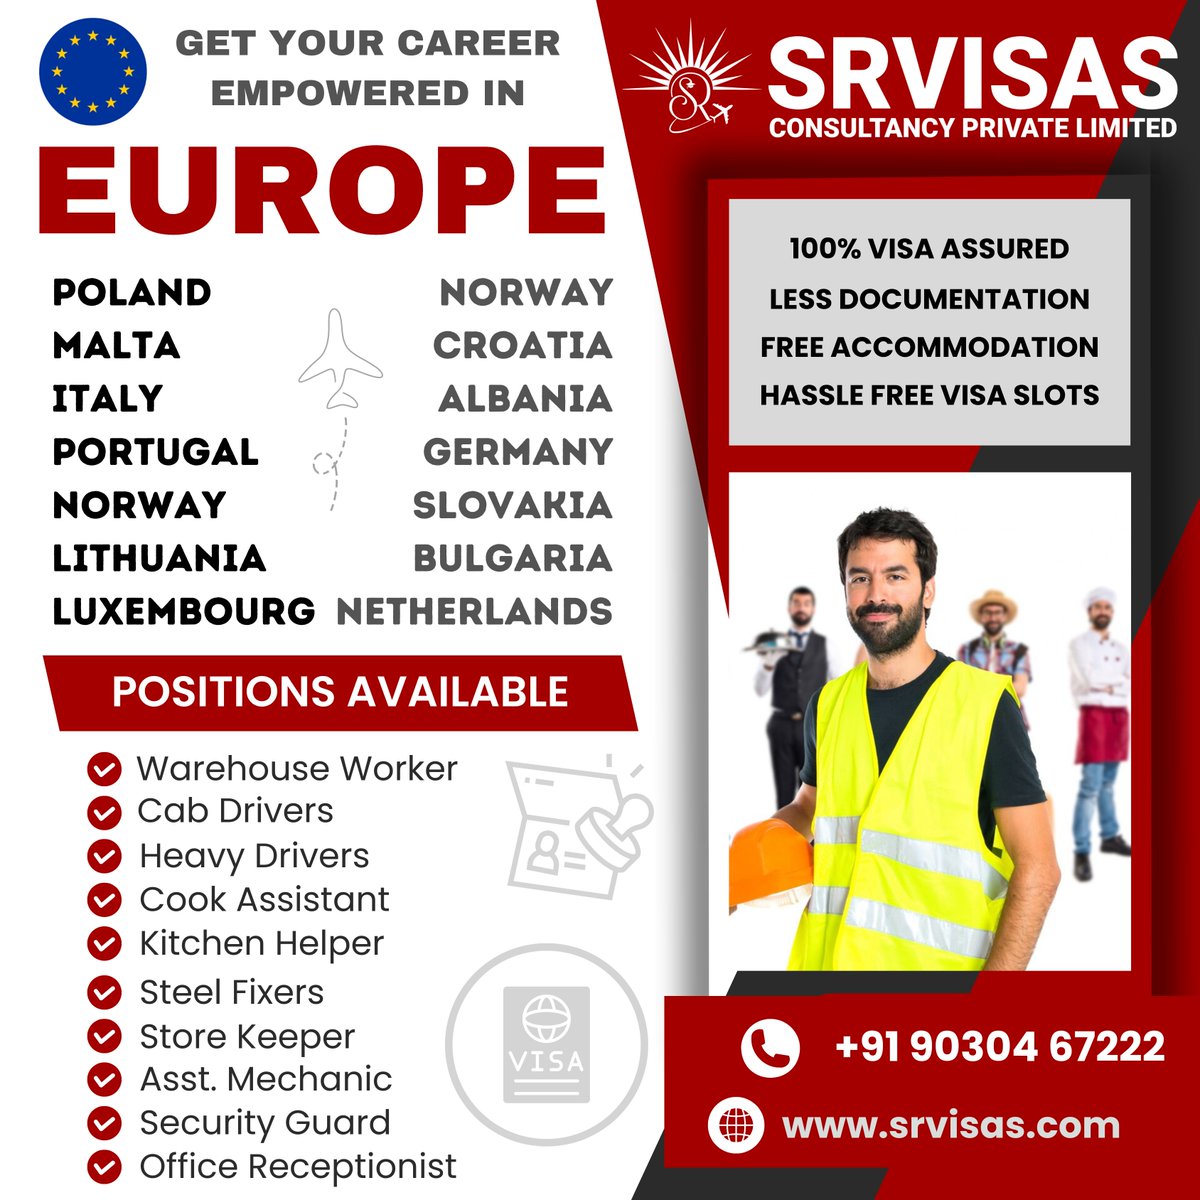 Get Your Career Empowered in Europe. Global Opportunities Await. Work Permit Visa Jobs Available. 
#WorkVisa #CareerGoals #VisaService #WorkAbroad #ImmigrationServices #VisaAssistance #VisaExpert #VisaConsultation #VisaApplication #WorkVisa #VisaProcess #VisaSupport